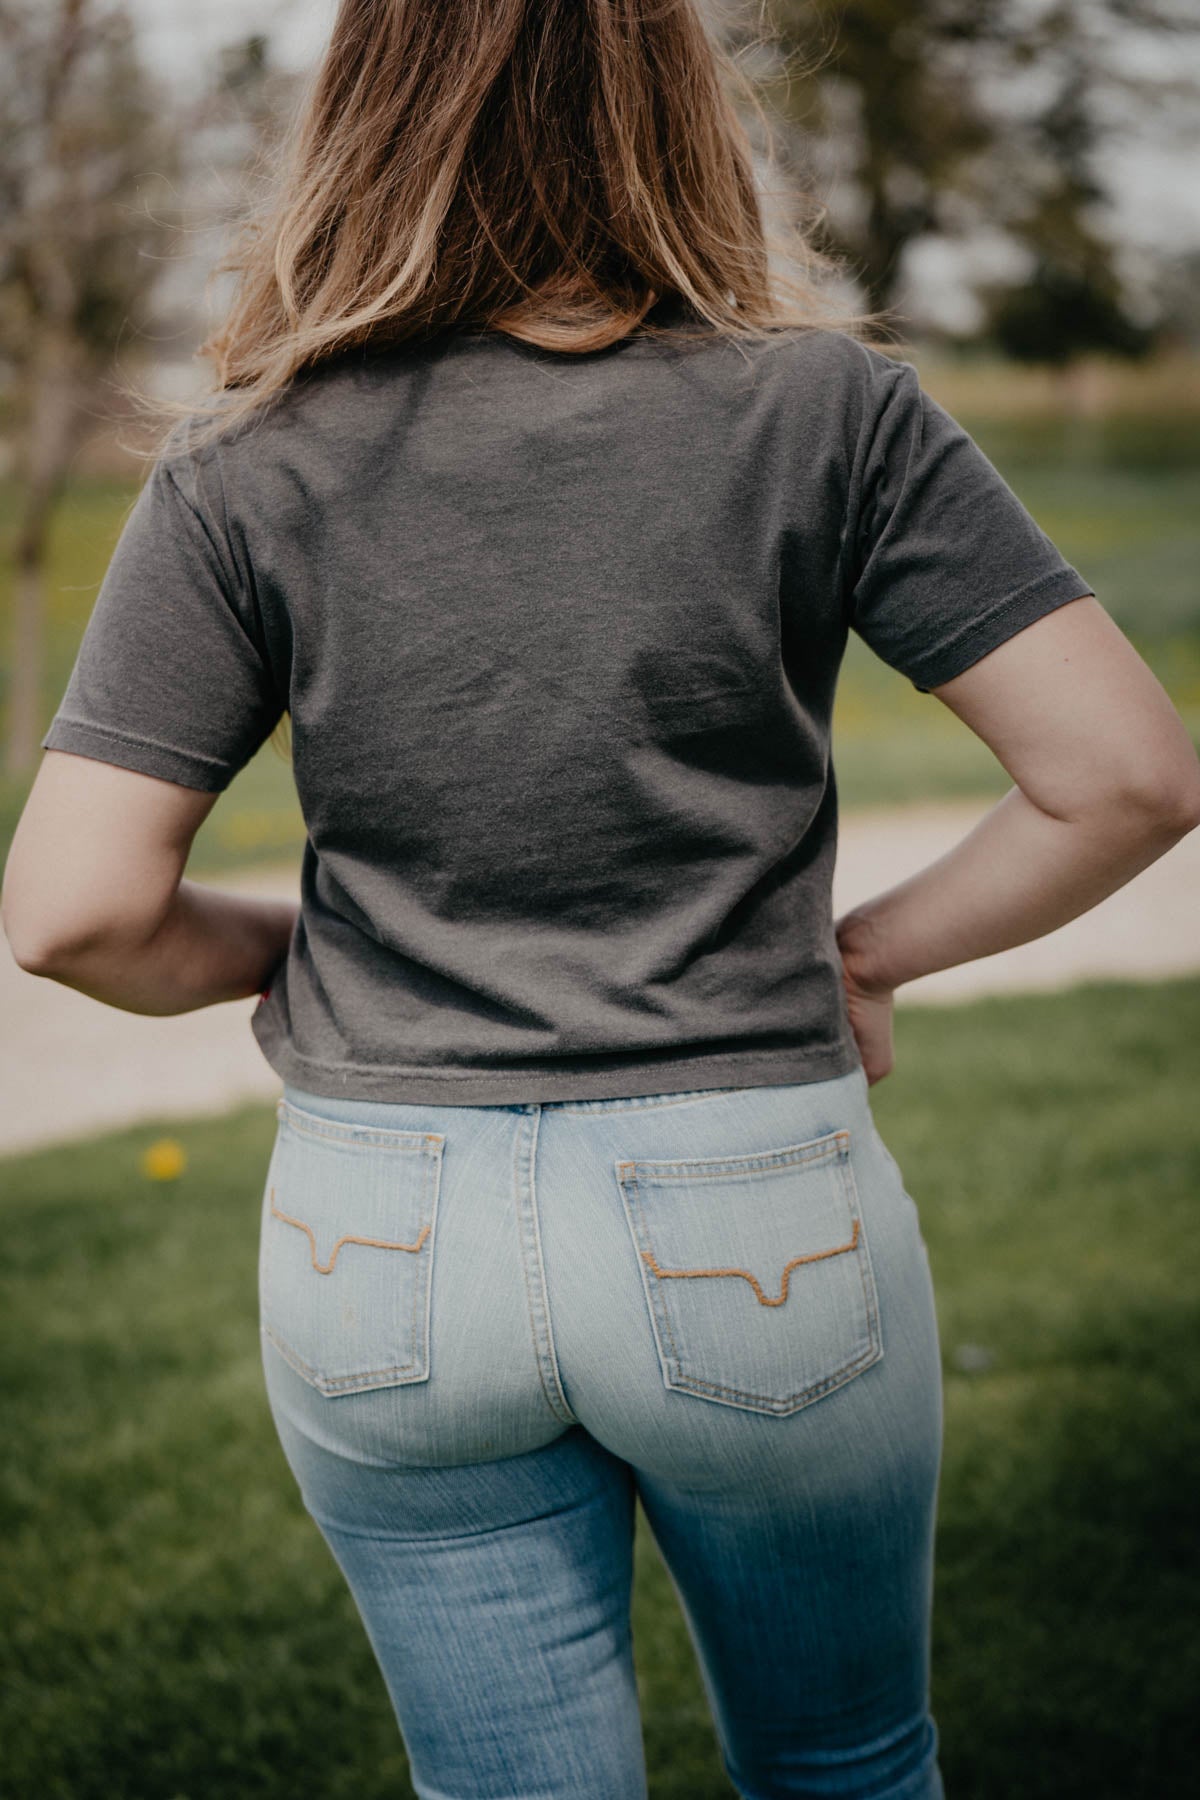 ‘Laurel Canyon’ Kimes Ranch Women’s Charcoal Graphic T-Shirt (S-XXL)